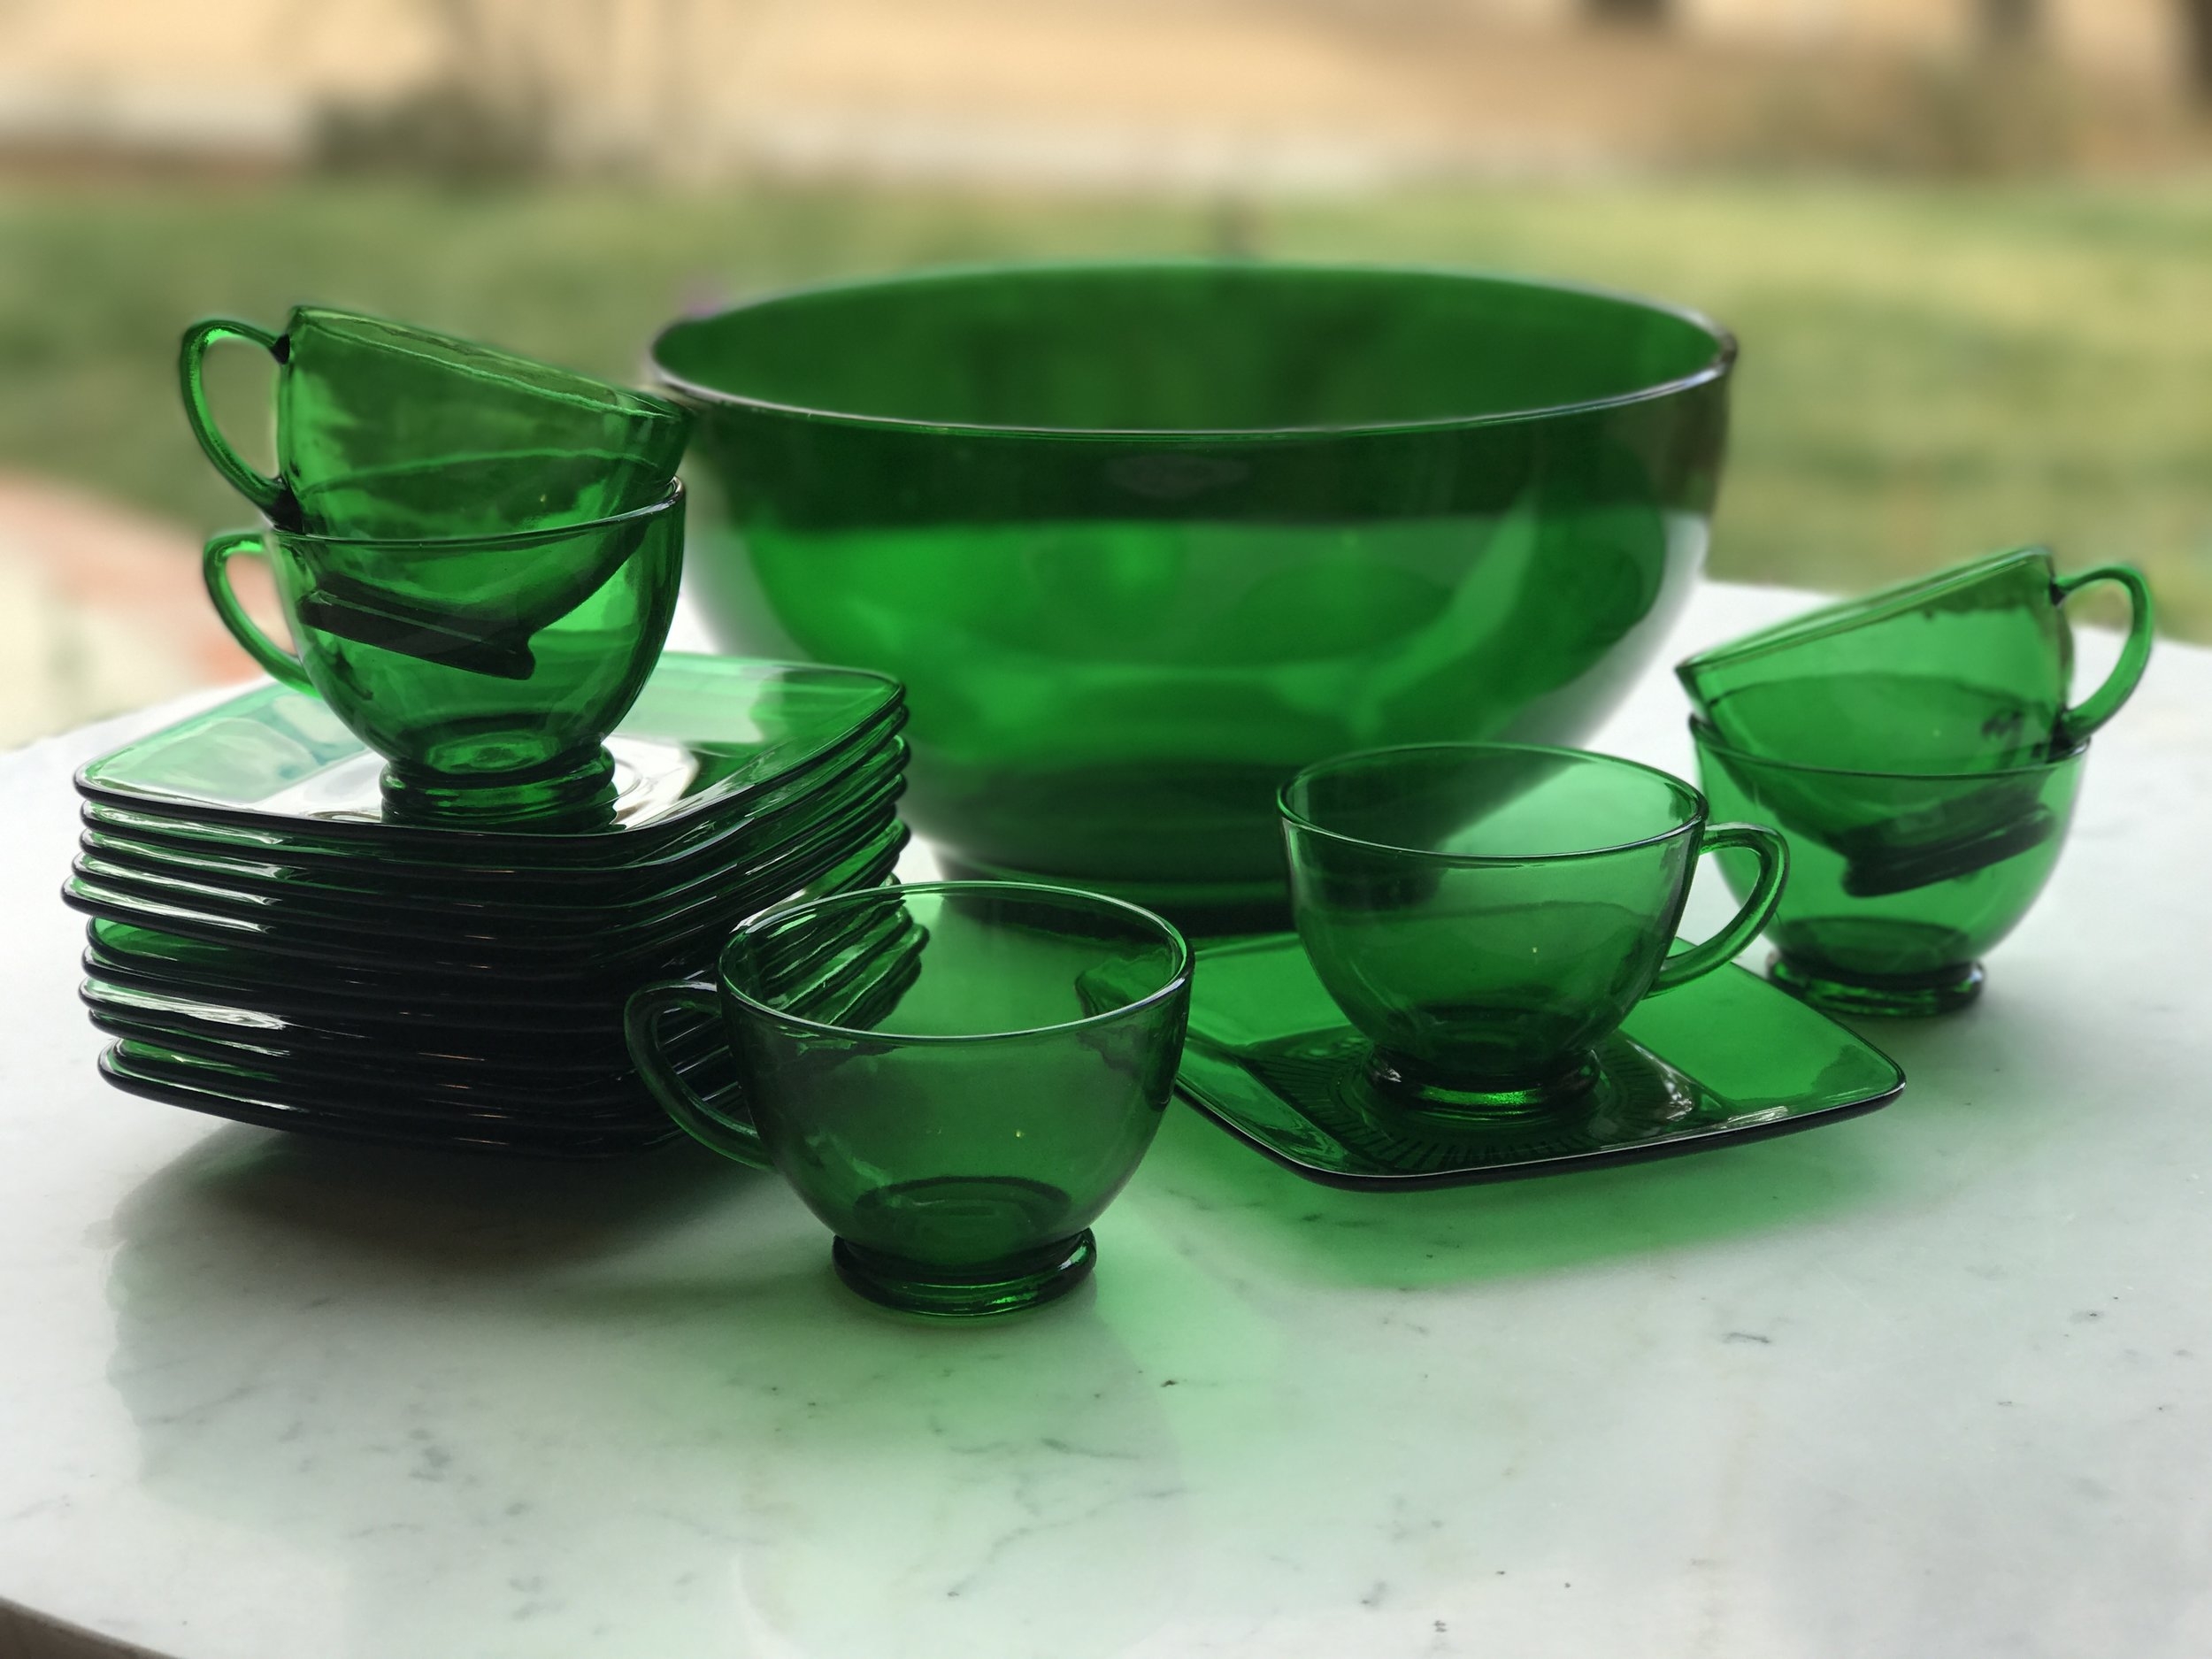 https://images.squarespace-cdn.com/content/v1/5906d7253a04117659d8d574/1536289138902-82UYTZGMIMI33QC1YE9I/Libby-glass-punchbowl-cups-emerald-green.JPG